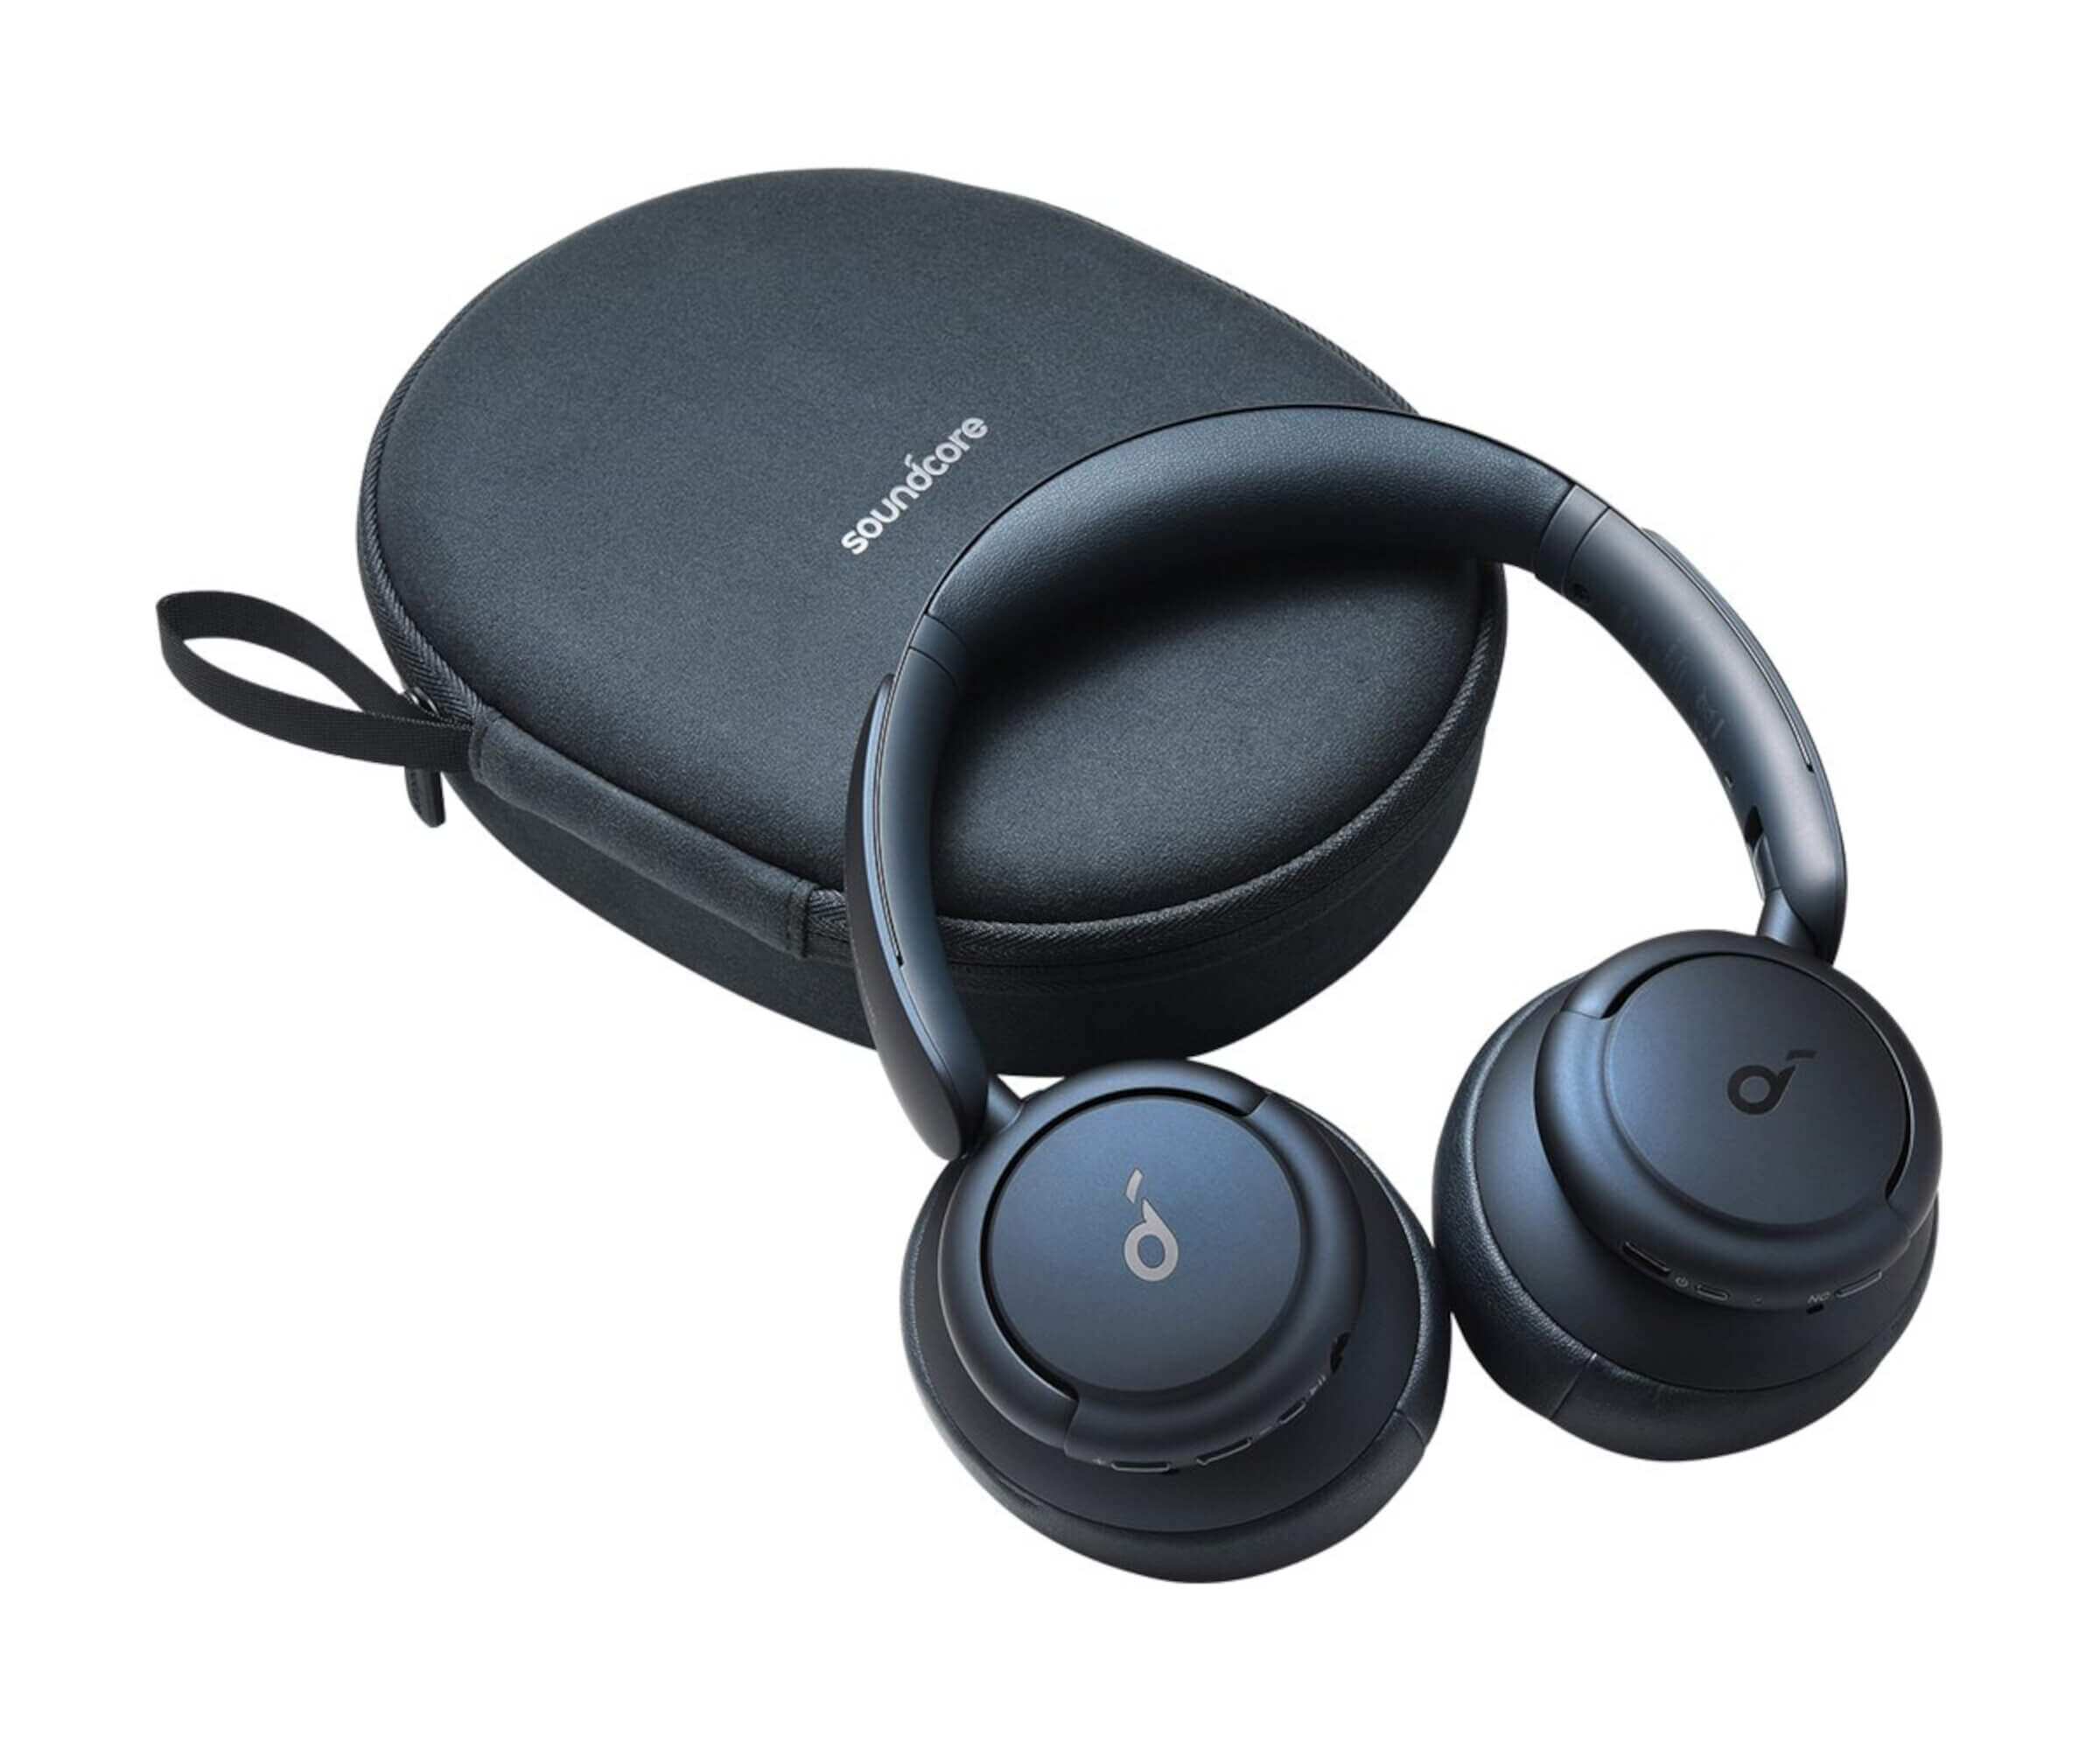 Anker Innovations Soundcore 134,90 € ohrum, Mikrofon - Life mit Q35 Kopfhörer 